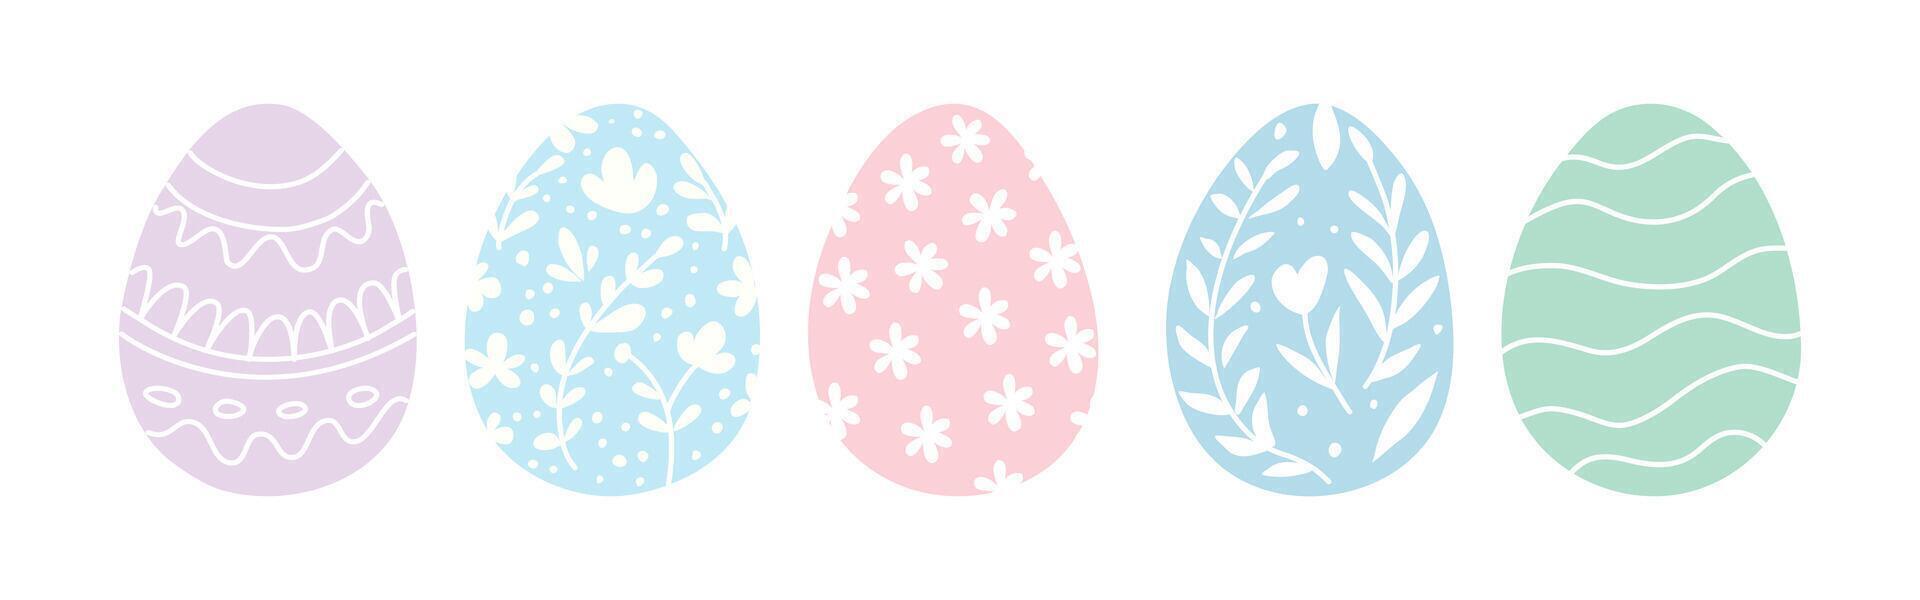 Pascua de Resurrección huevos íconos colocar. vector